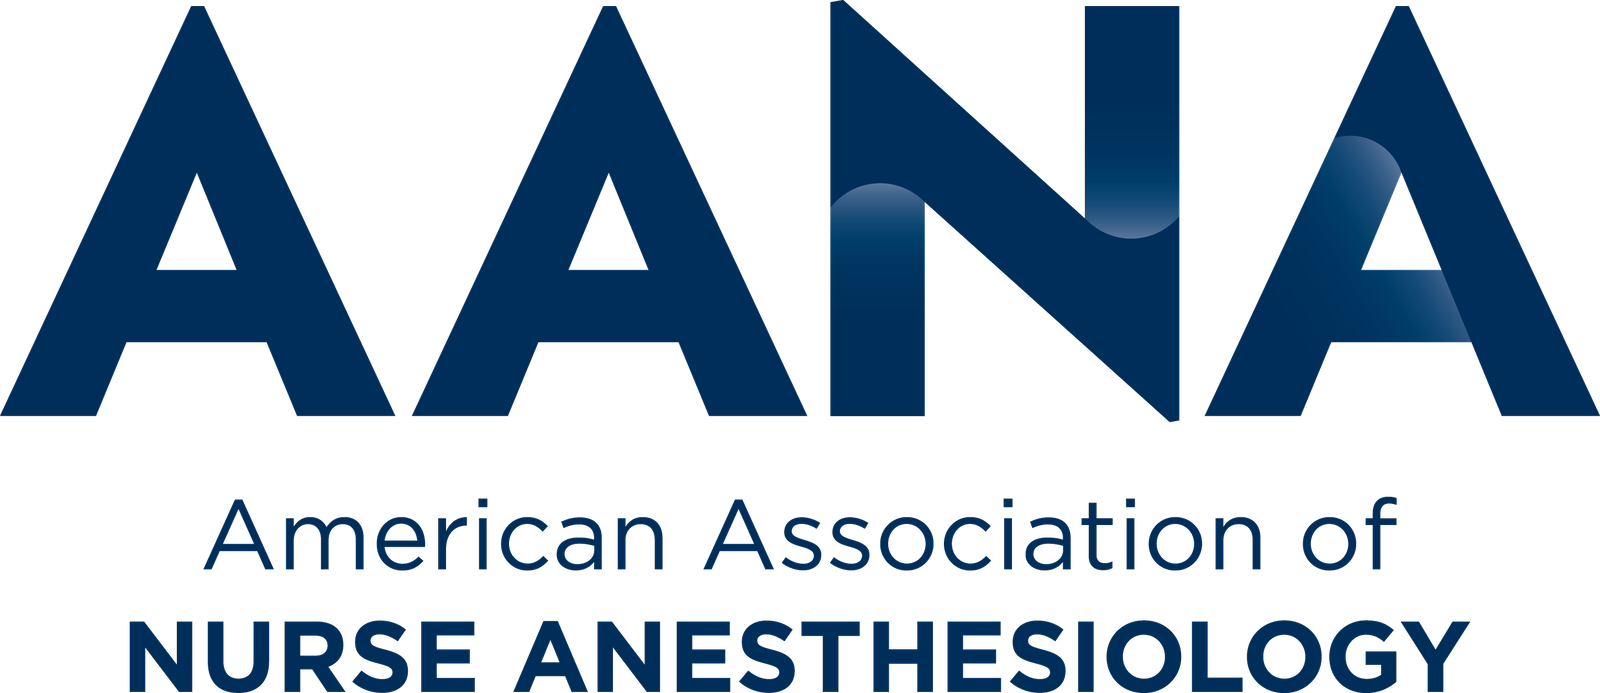 American Association of Nurse Anesthesiology logo